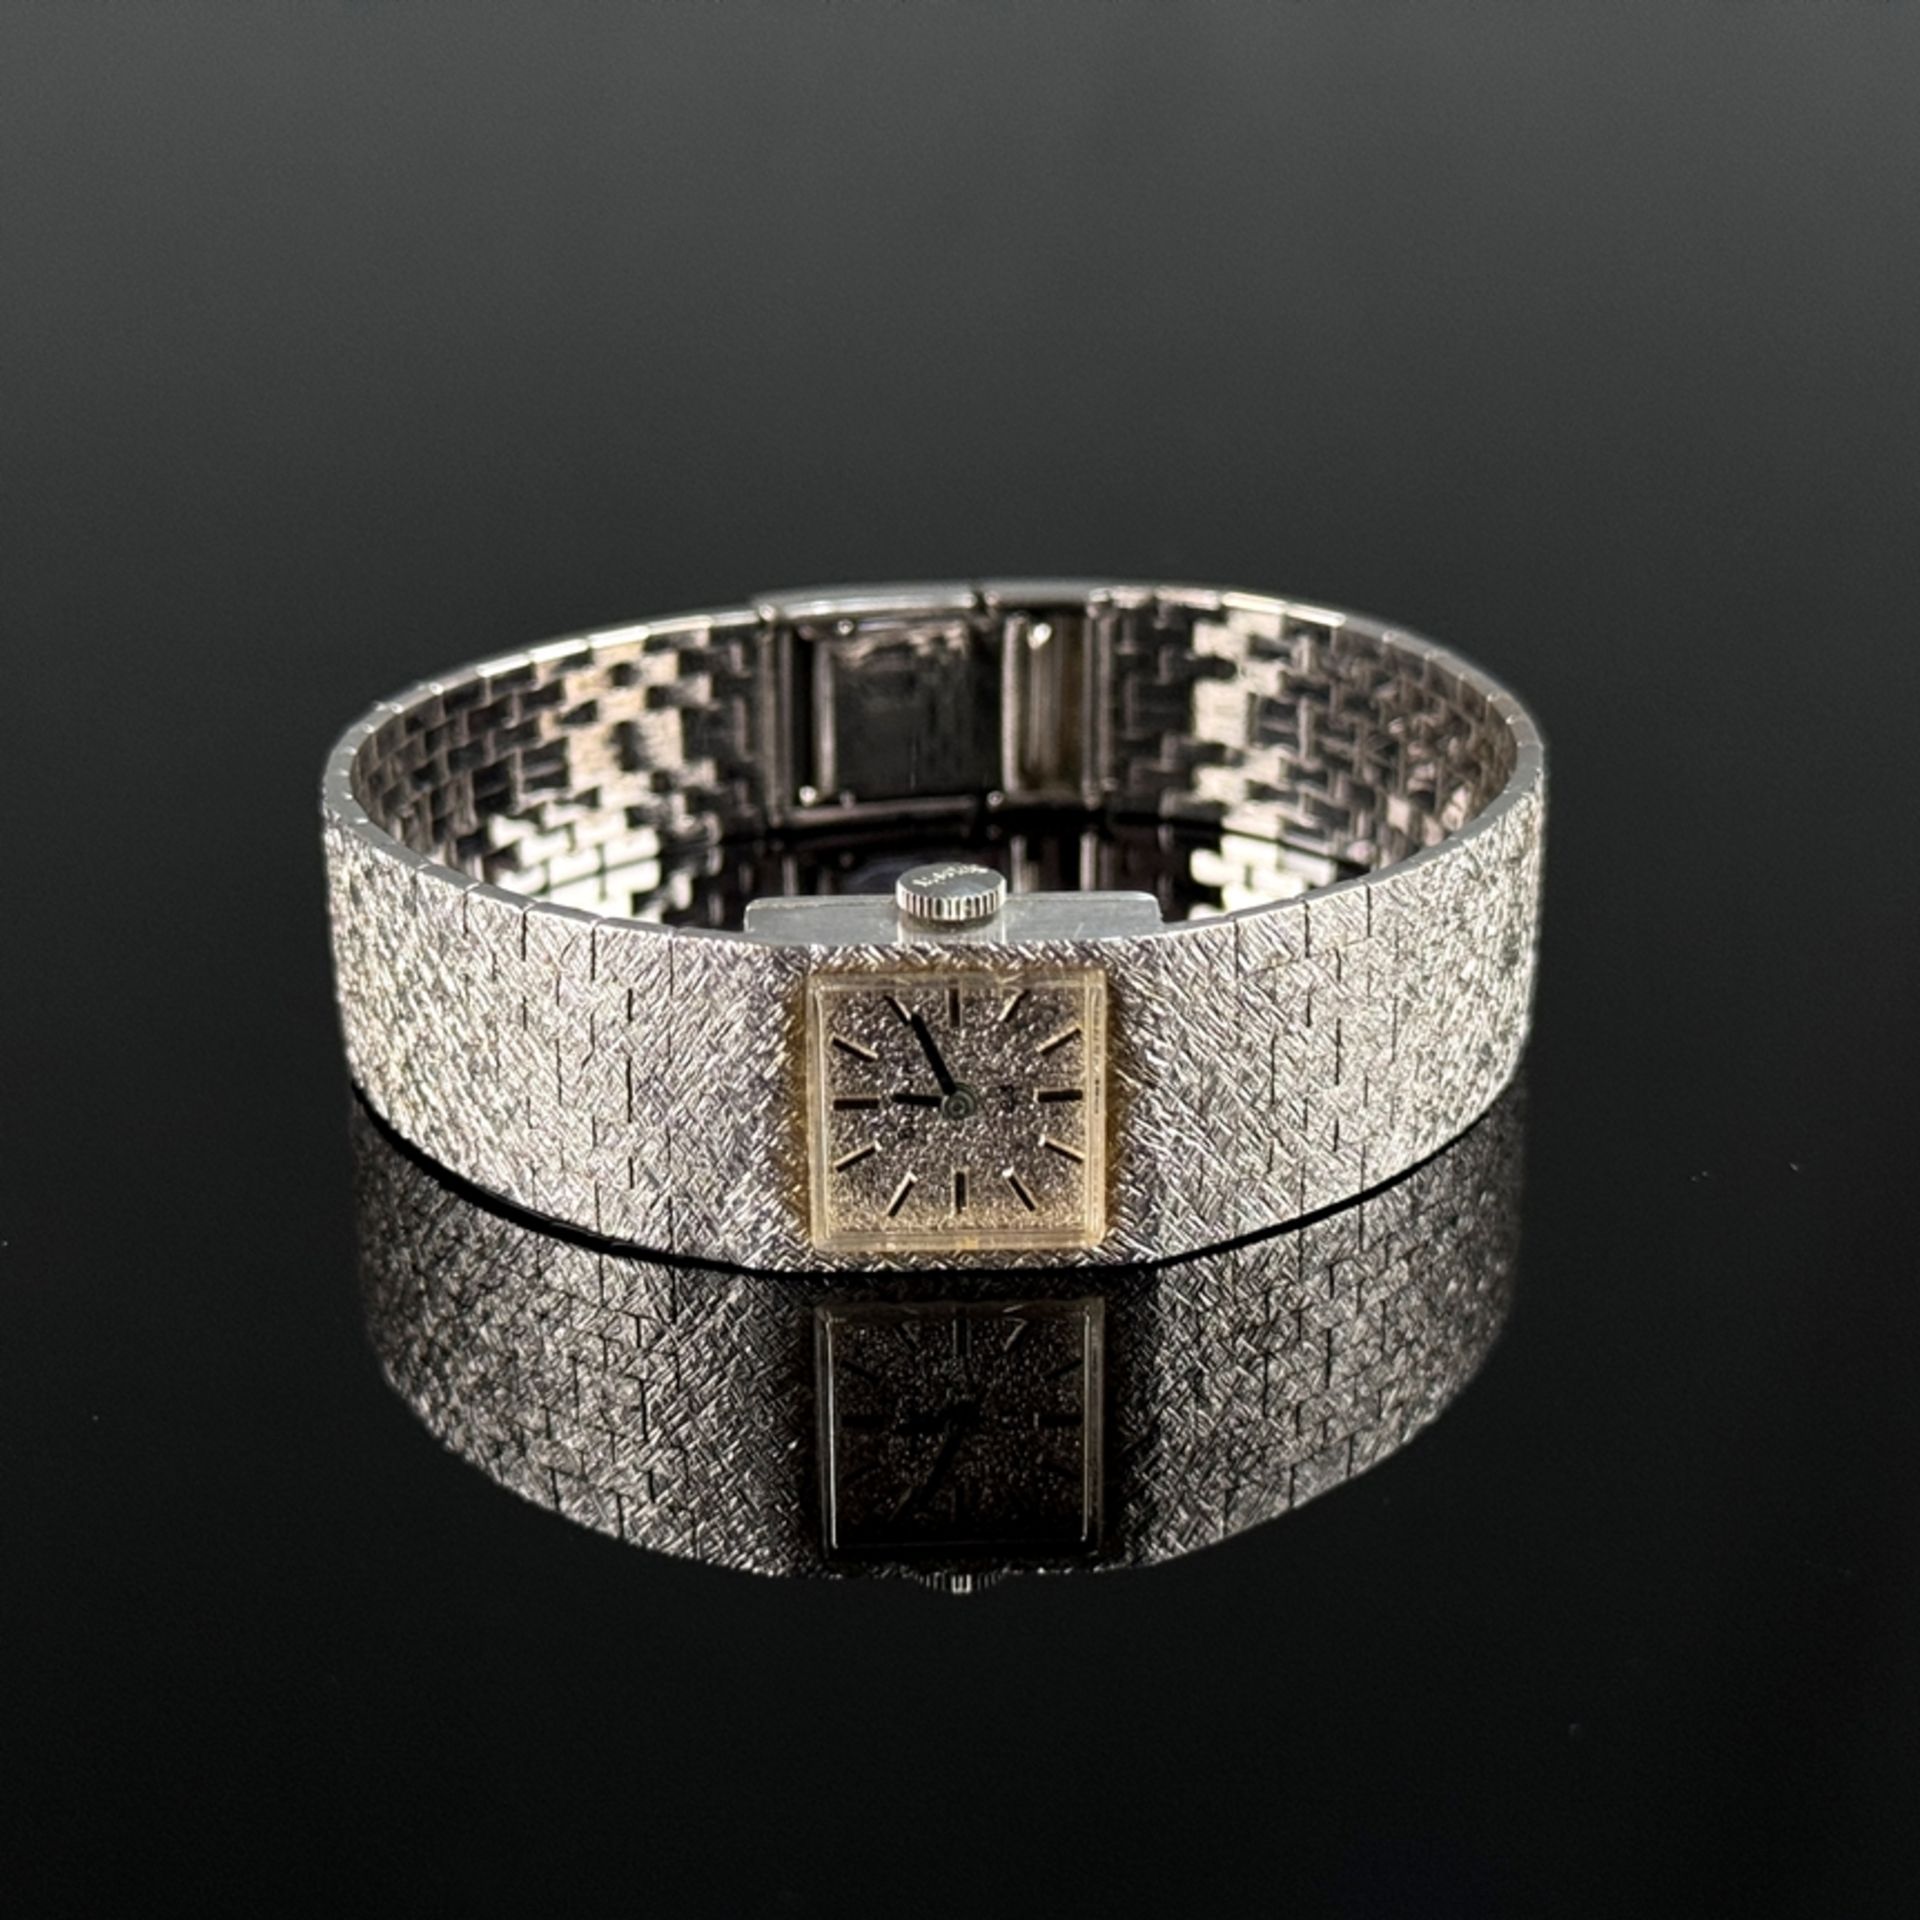 Wristwatch, Bulova, 585/14K white gold (hallmarked), total weight 38.1g, rectangular case and dial